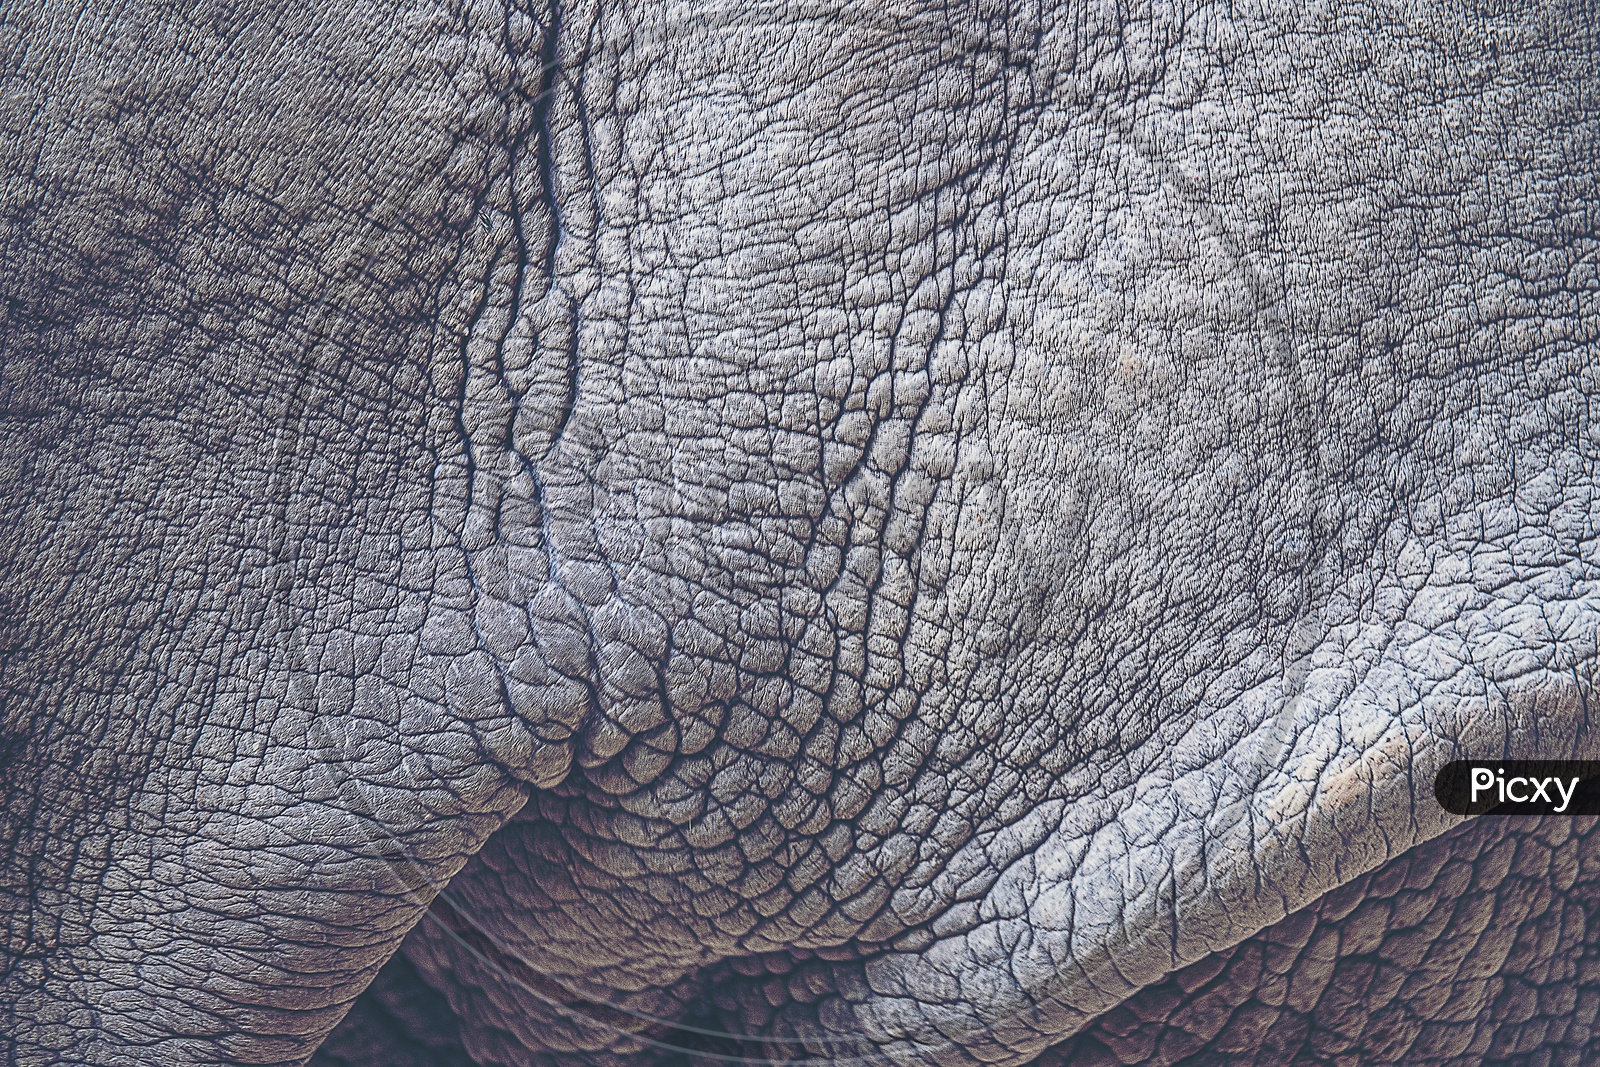 Close up of texture of Rhino skin